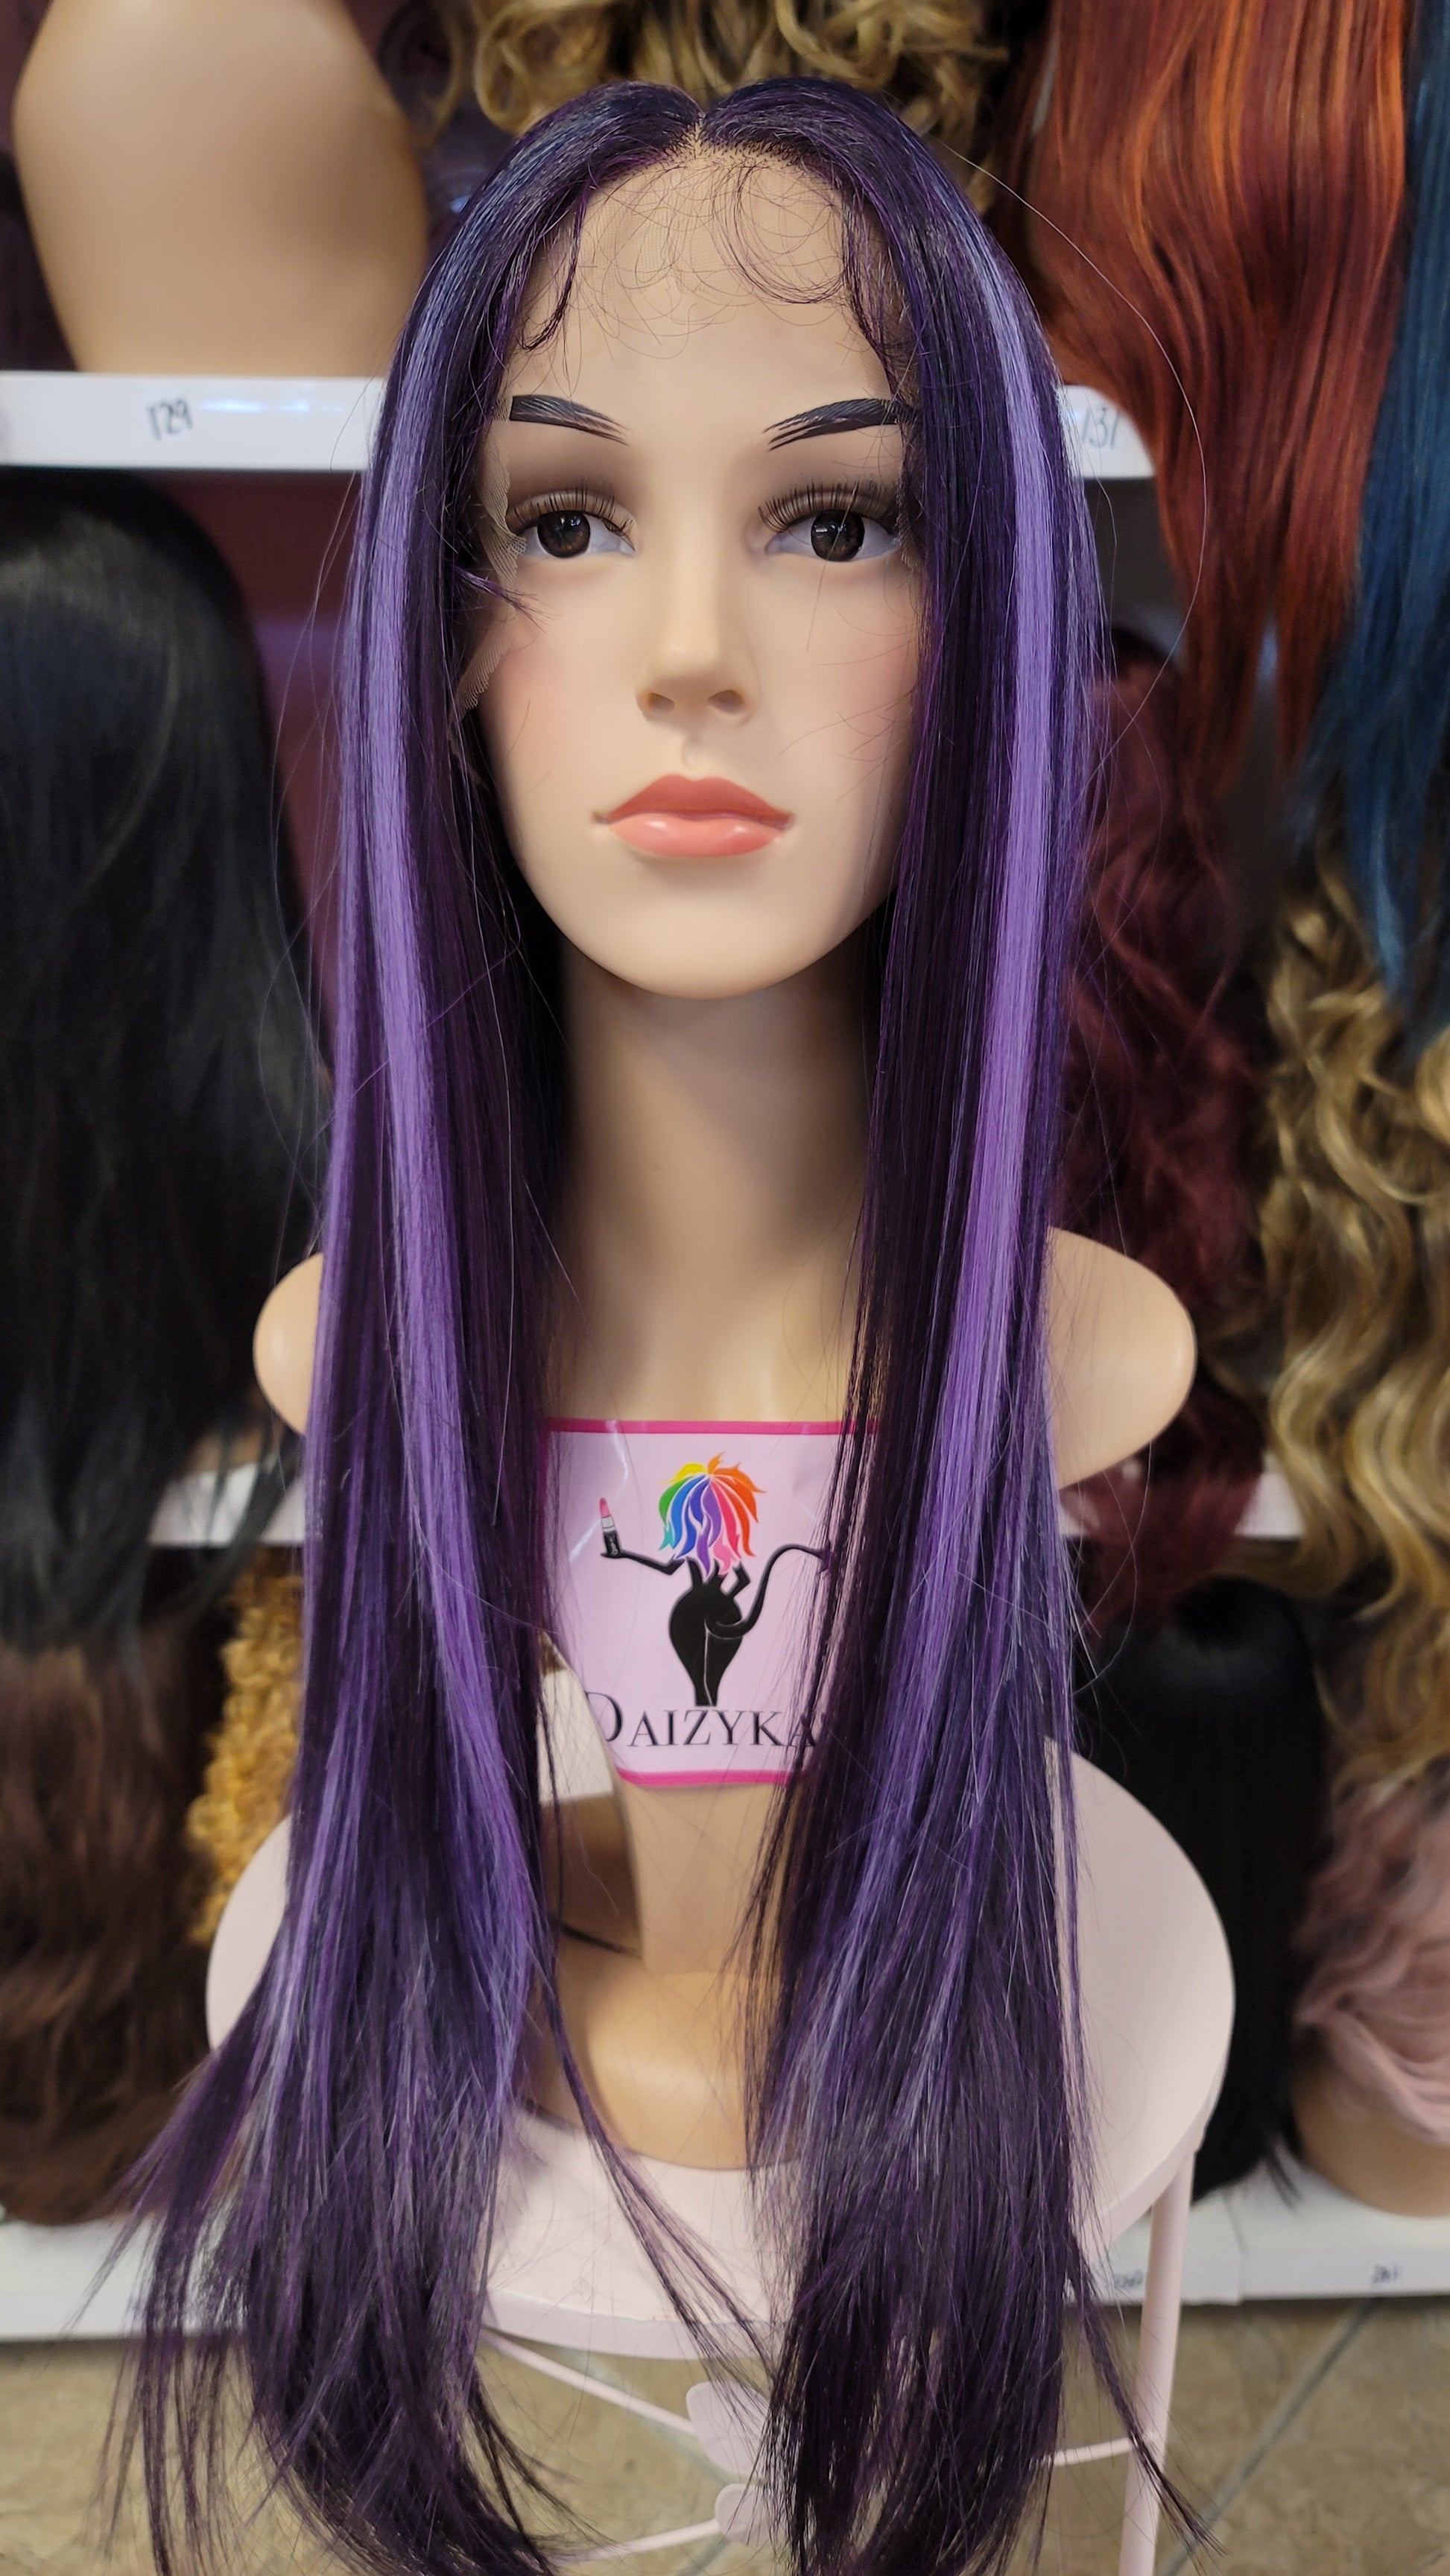 26 Alexa- Middle Part Lace Front Wig - PURPLE - DaizyKat Cosmetics 26 Alexa- Middle Part Lace Front Wig - PURPLE DaizyKat Cosmetics Wigs